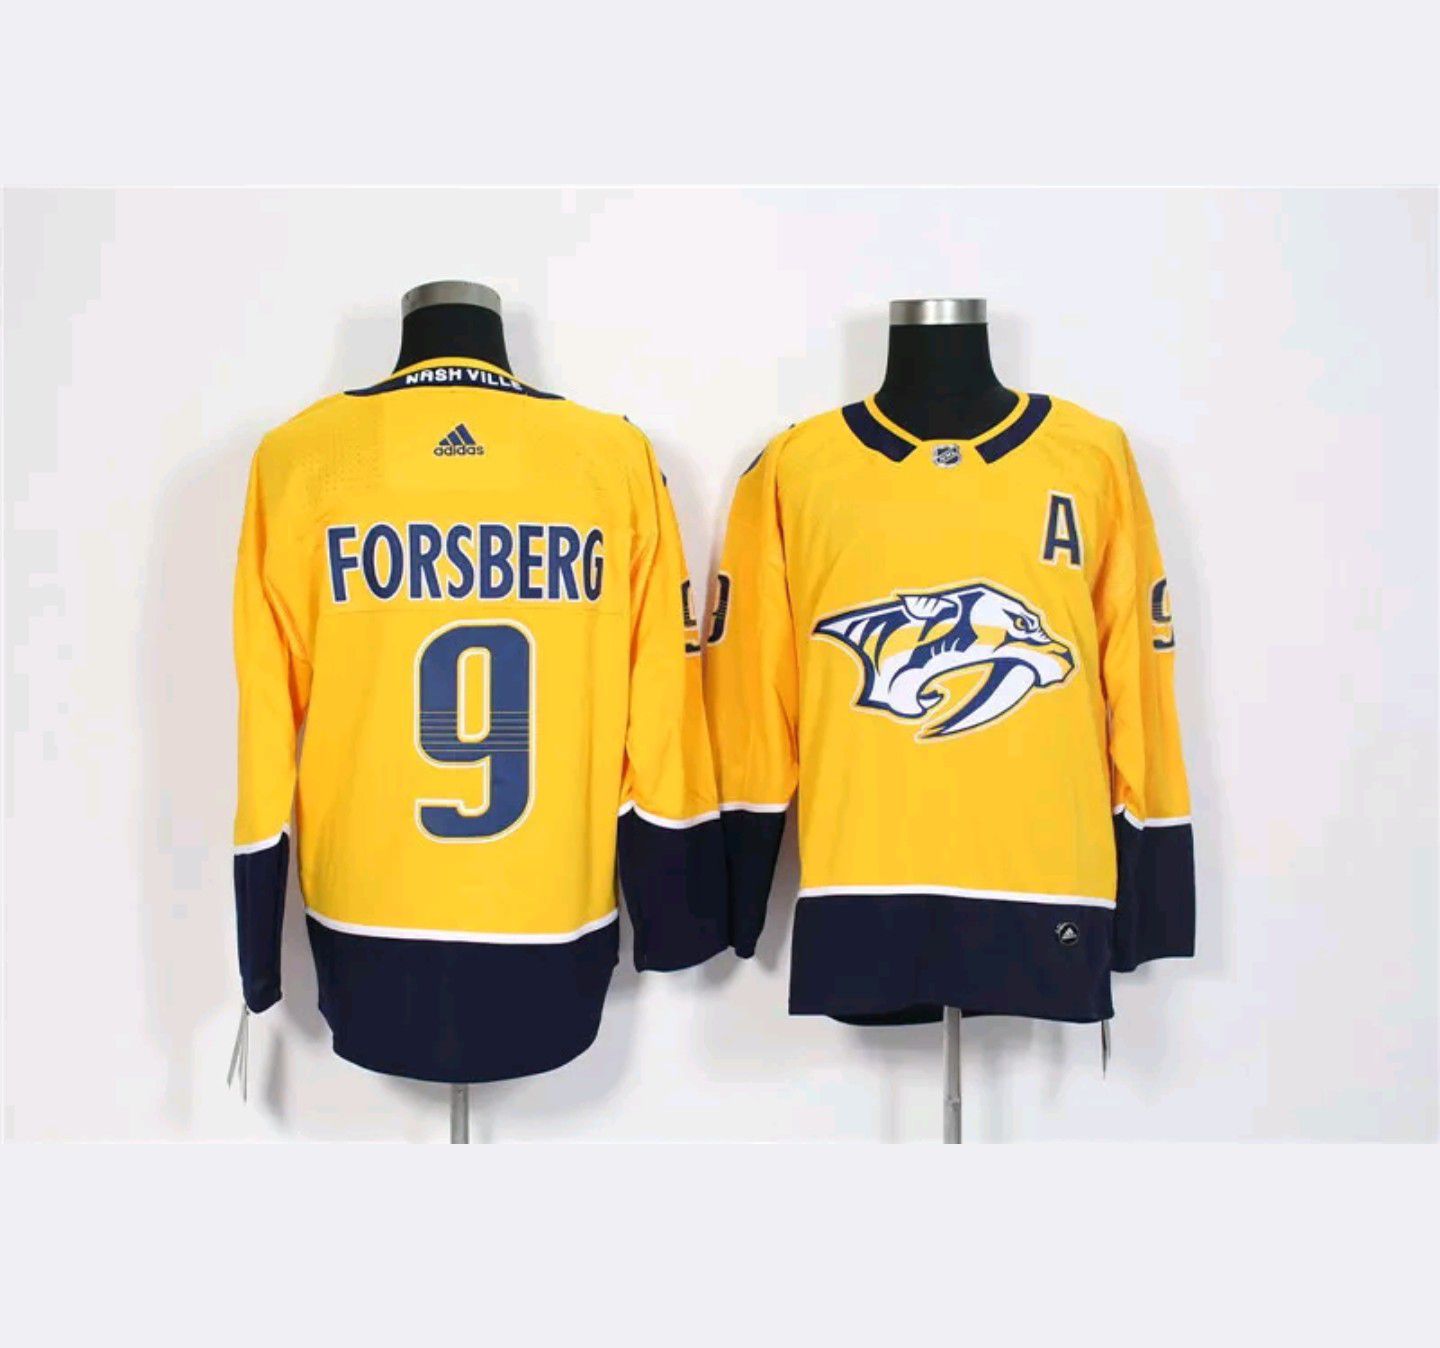 Forsberg predators swingman home jersey size medium and xl new $60